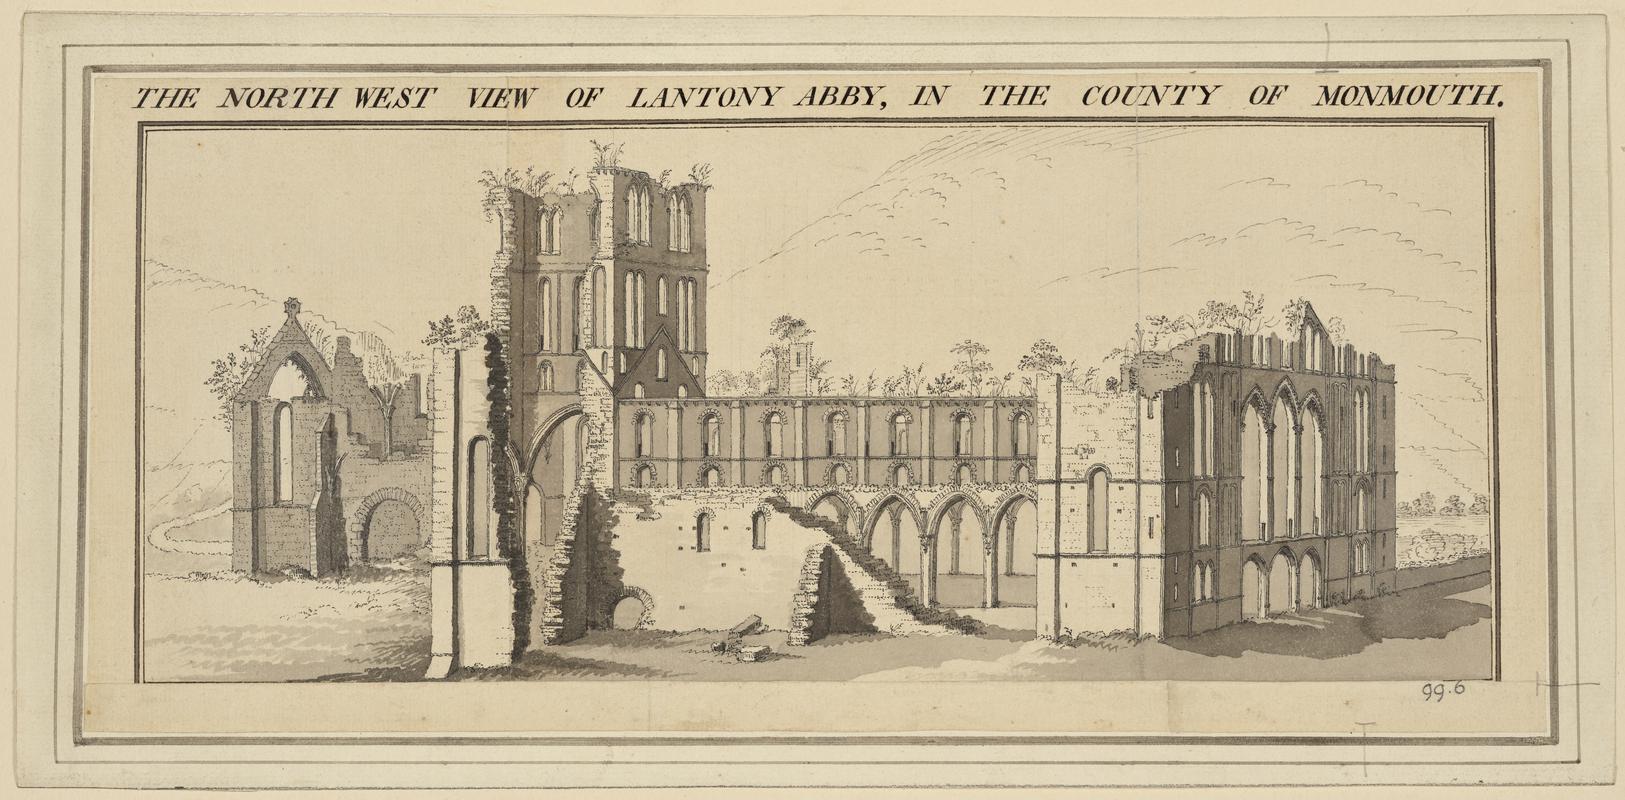 Llantony Abbey